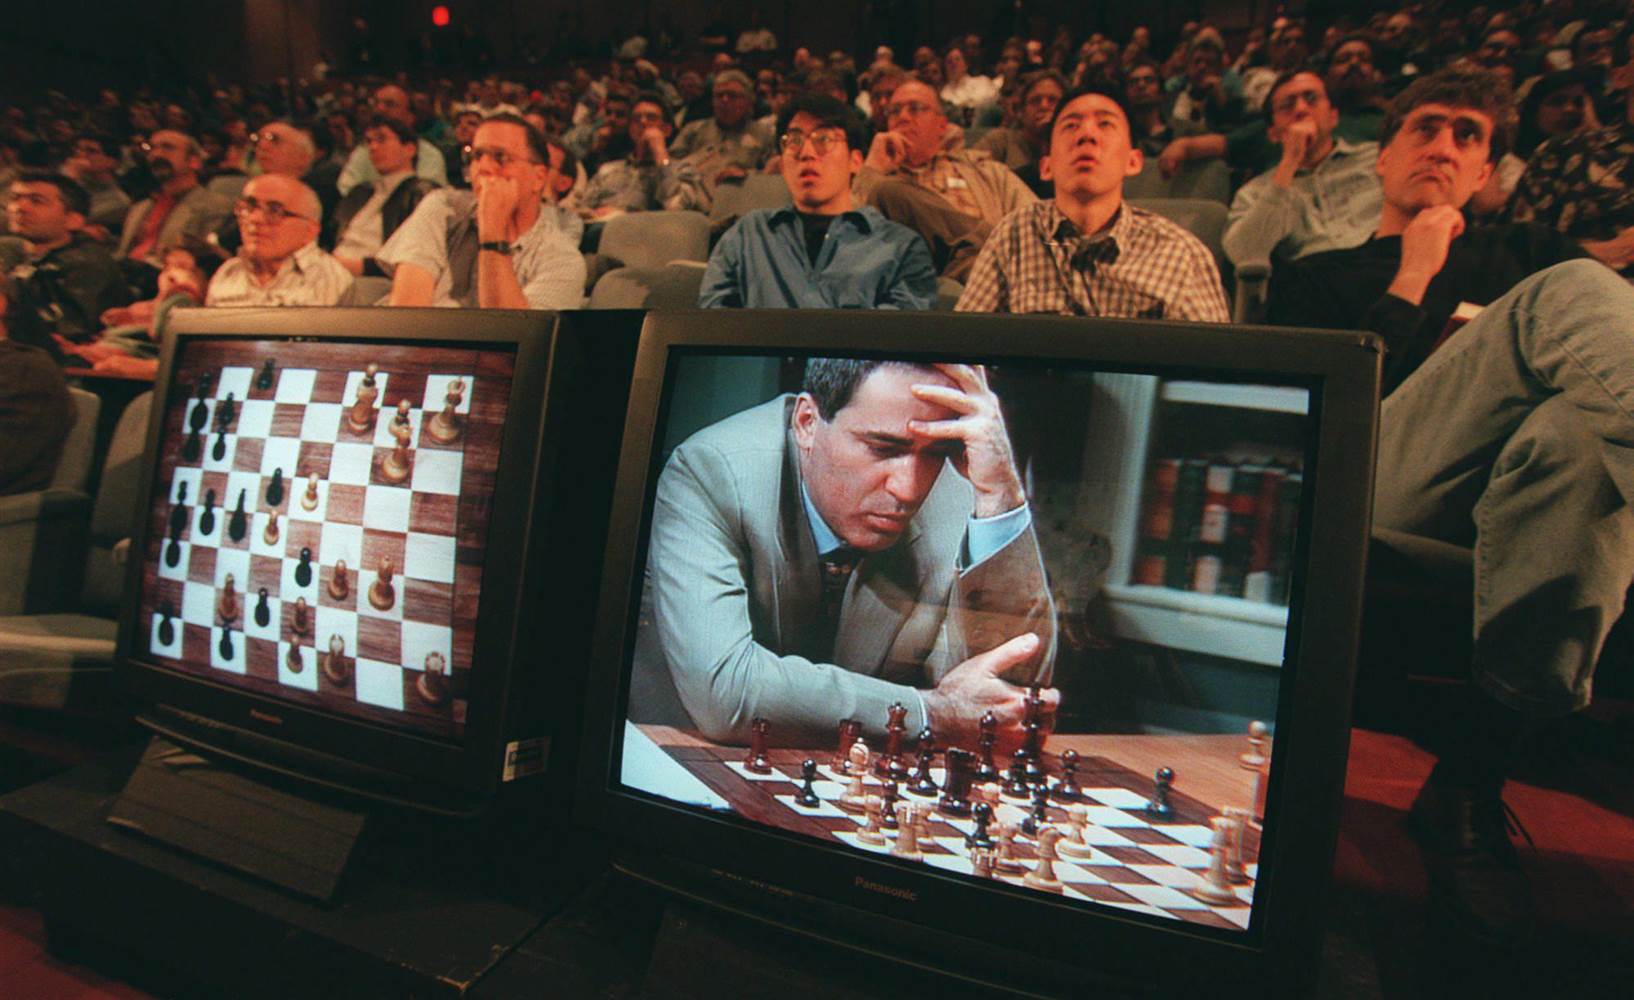 BOT.vinnik Chess: Combination Lessons, PC Mac Steam Game